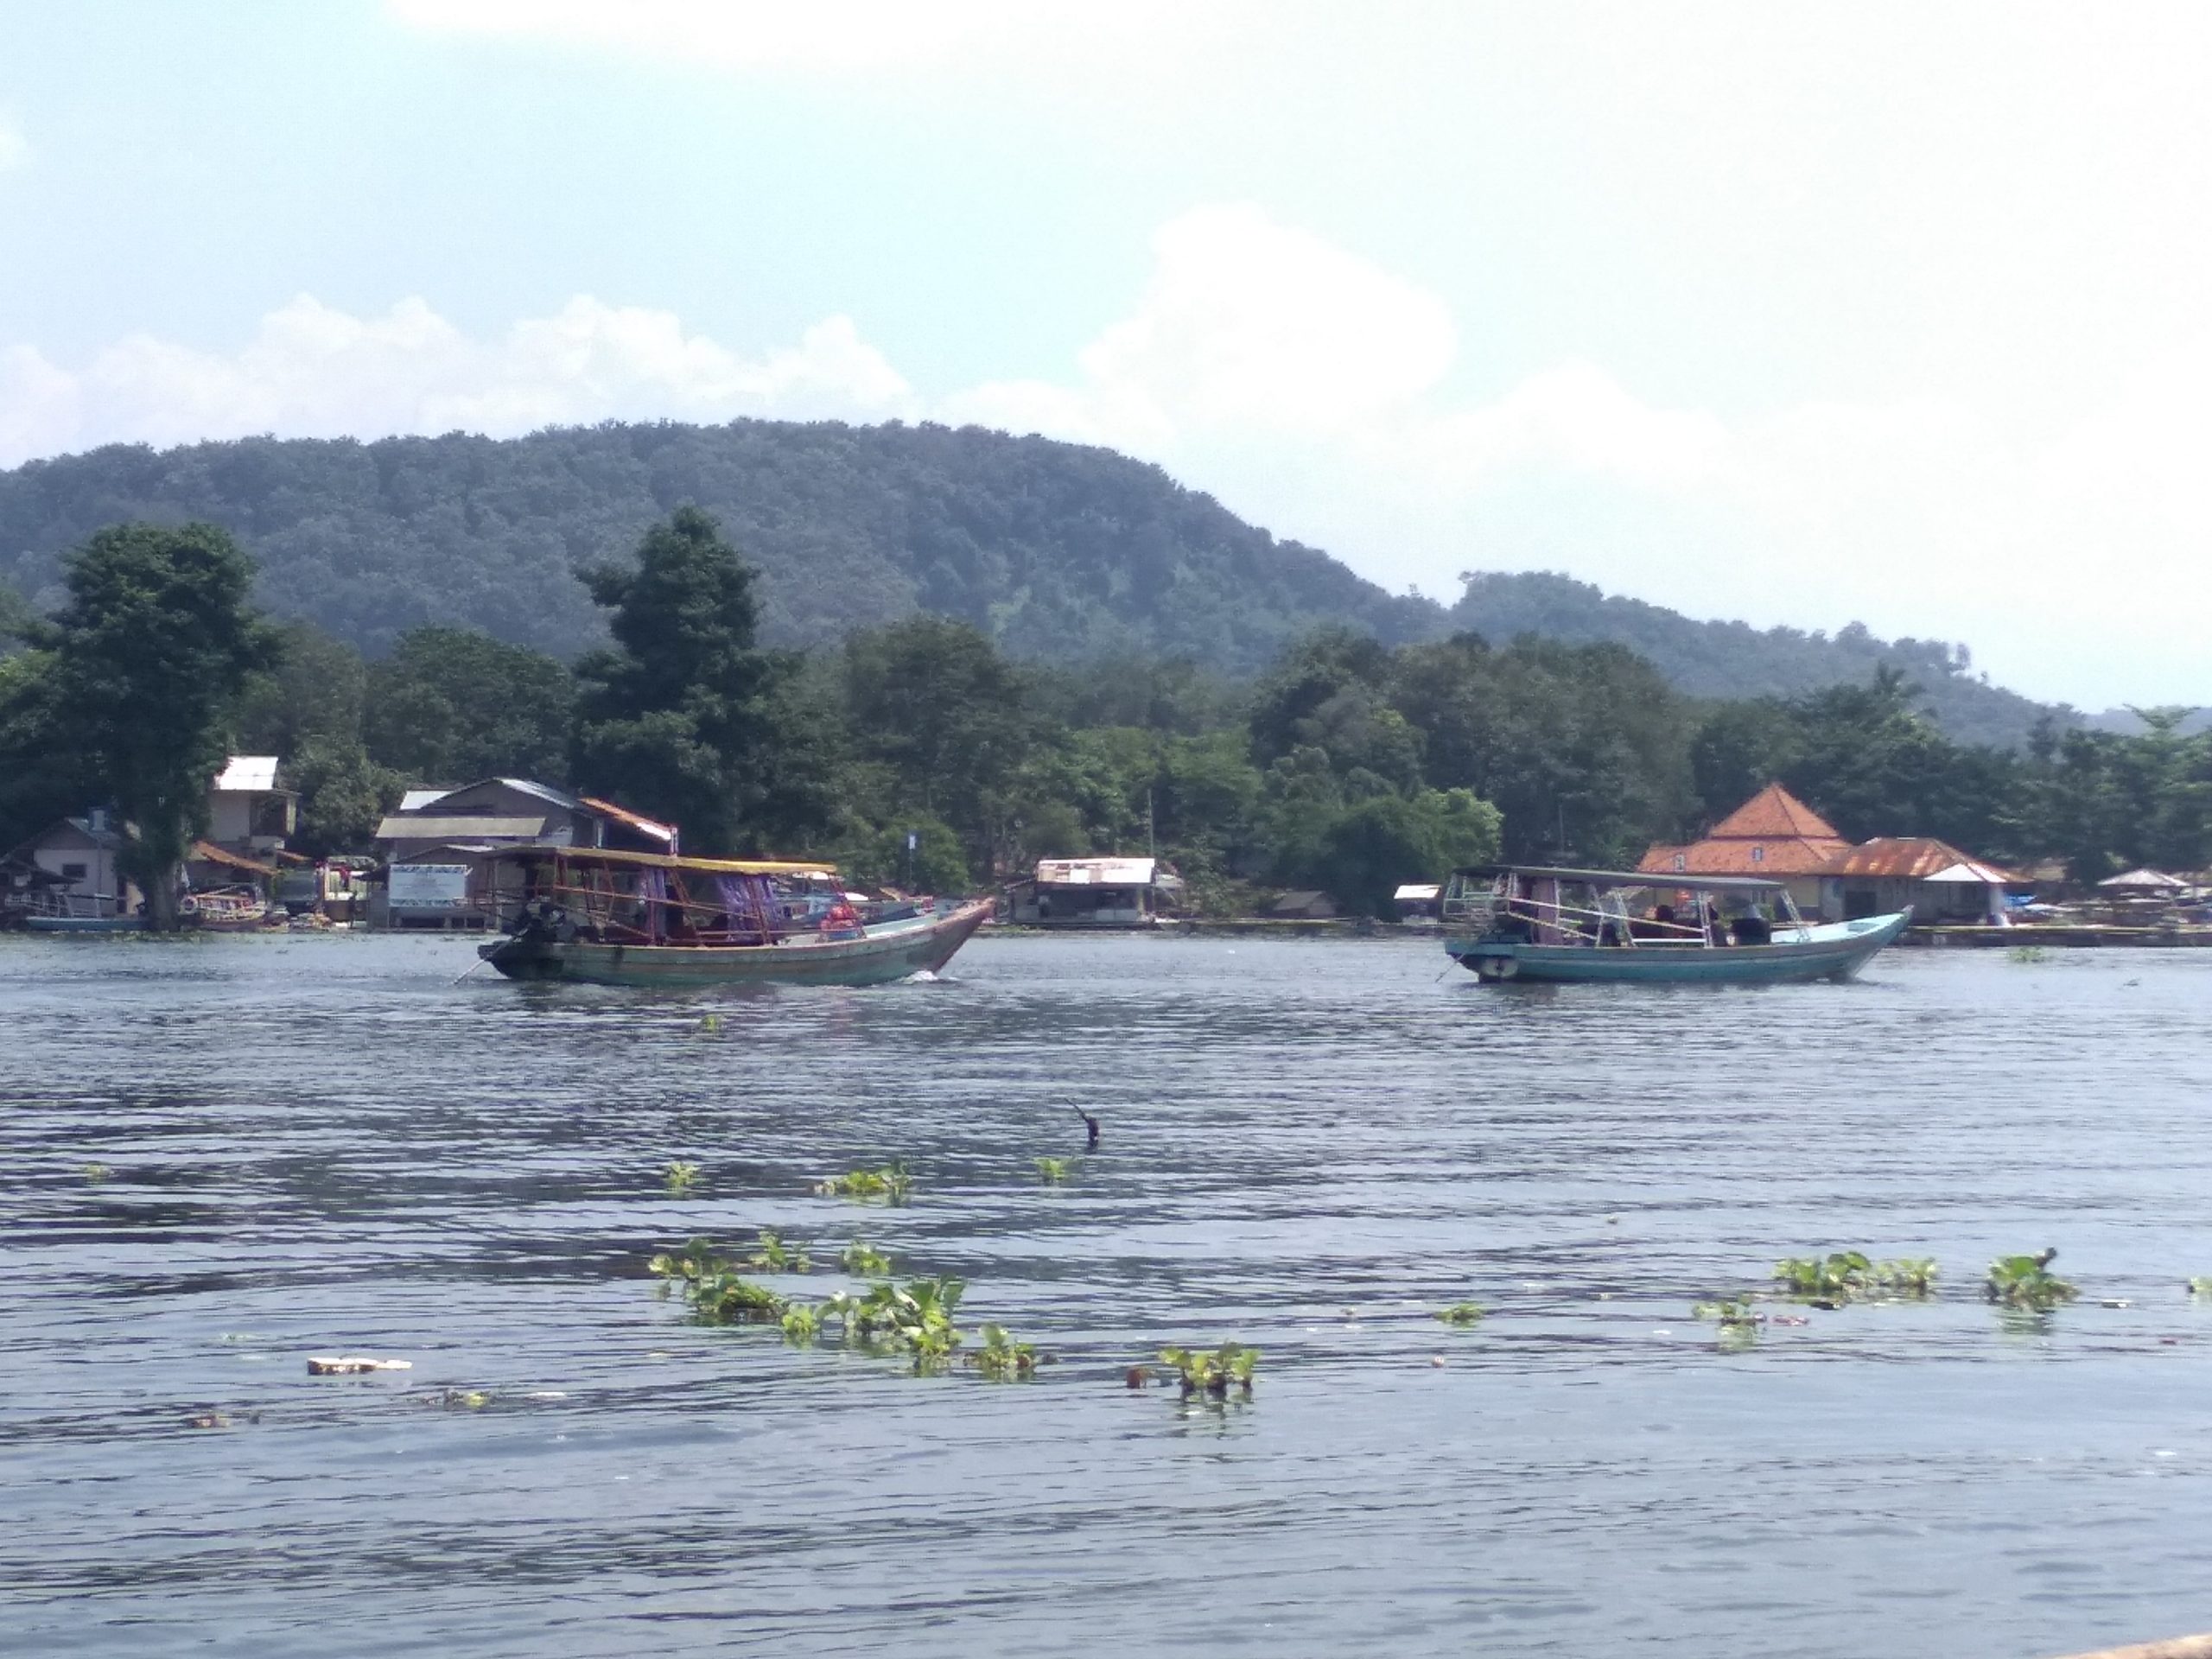 Imbas Korona, Sopir Perahu Jangari Minim Penghasilan